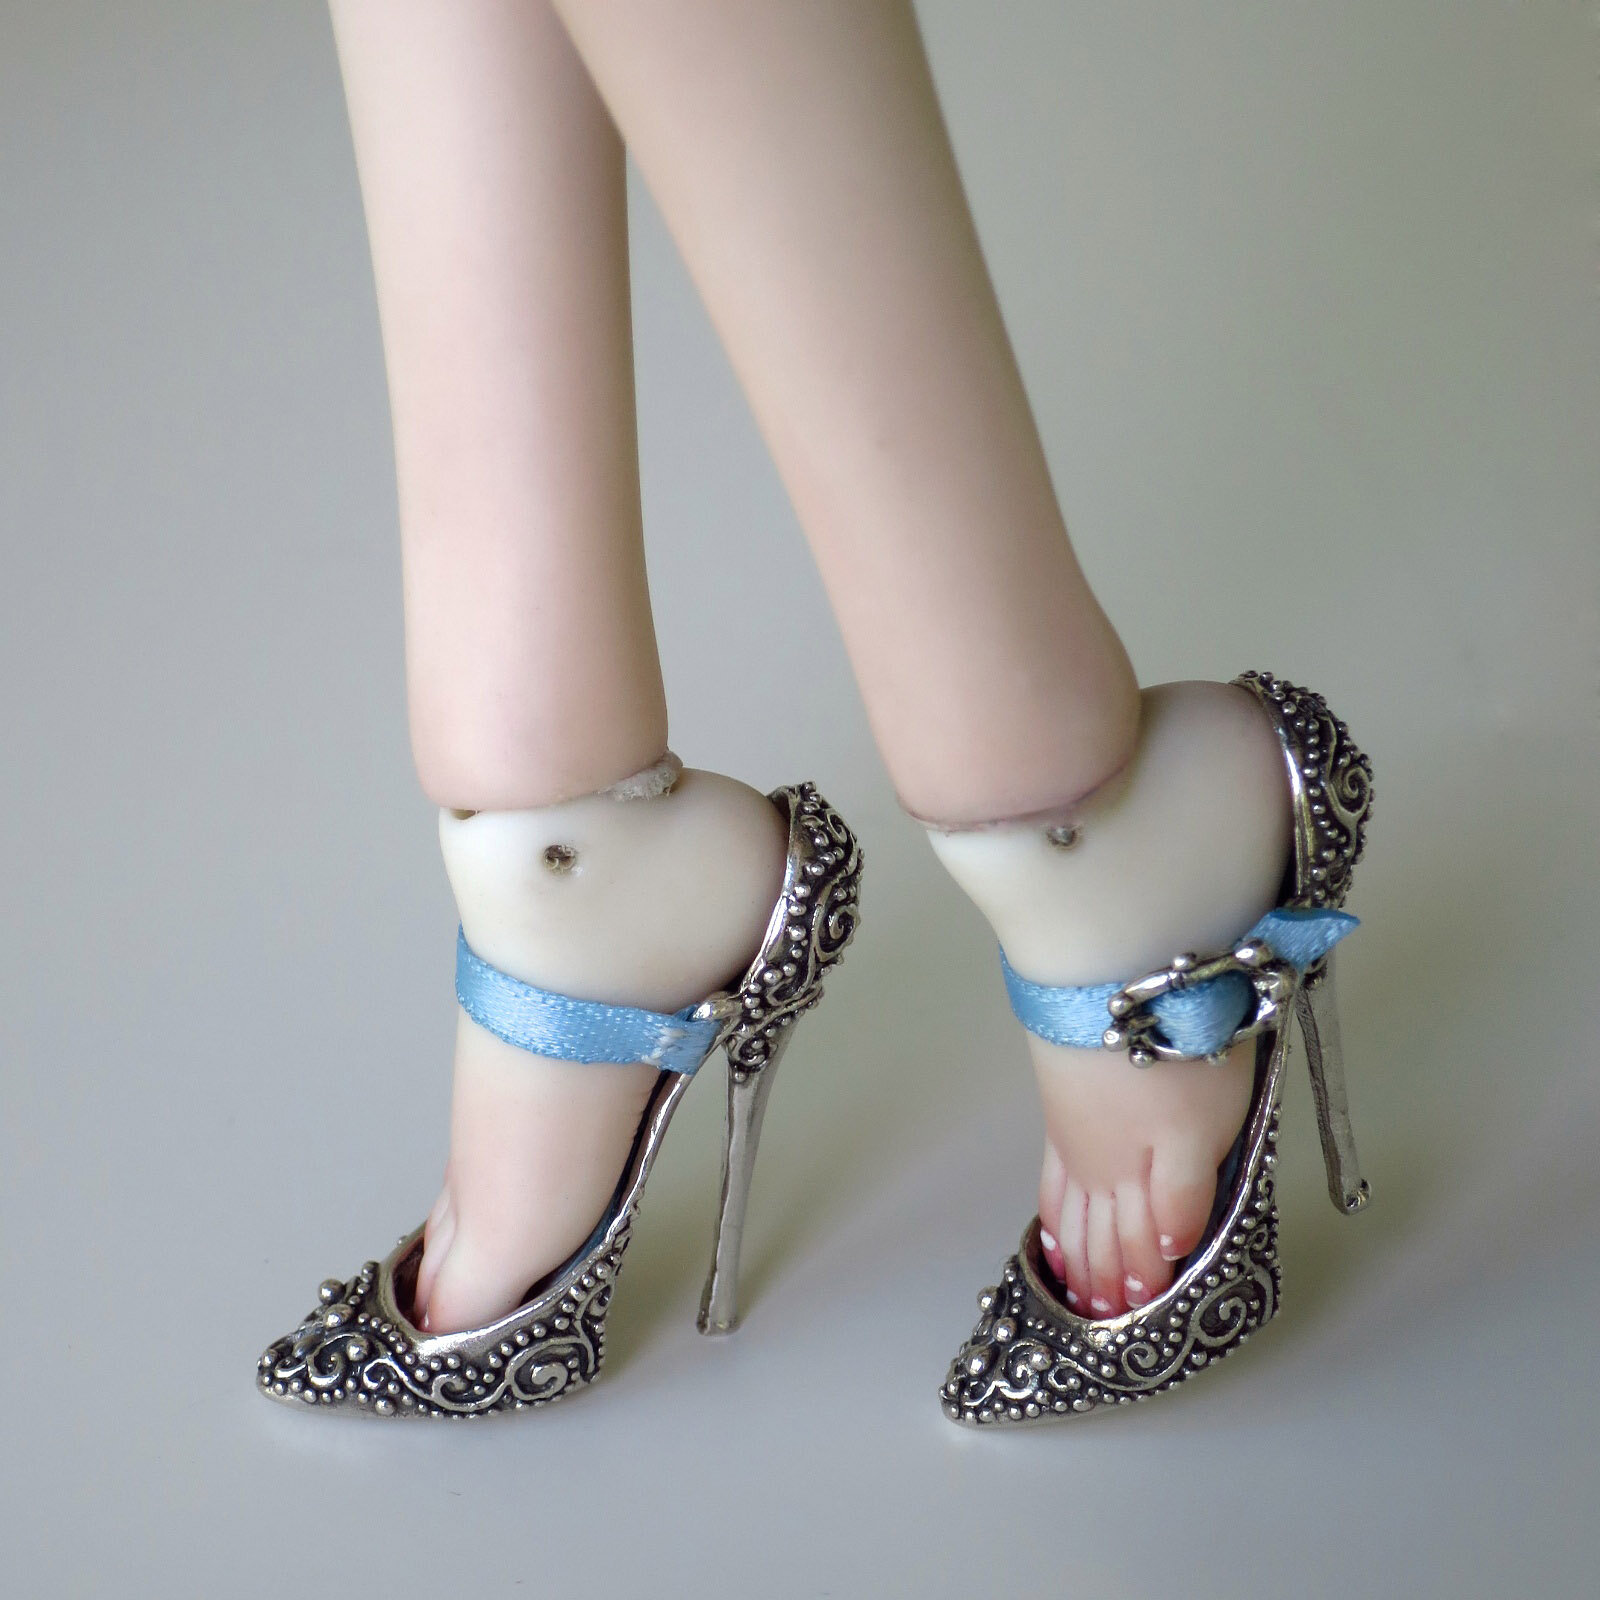 New Women 16Cm Super High Heel Shoes Platform Stiletto Ankle Strap Sandals  Party | eBay